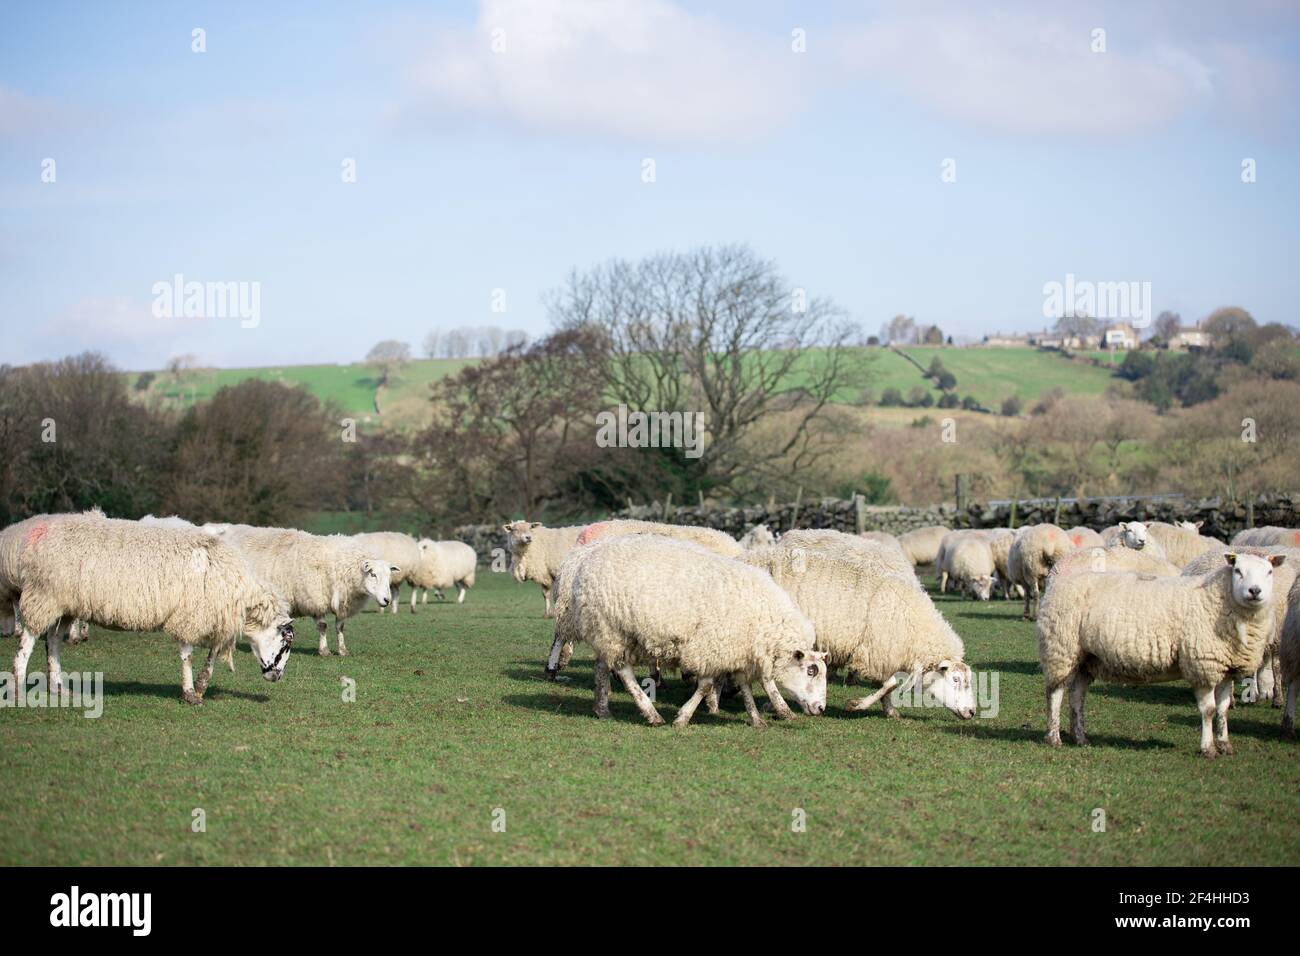 livestock farming Flock of sheep in green grass field grazing on the farm Stock Photo